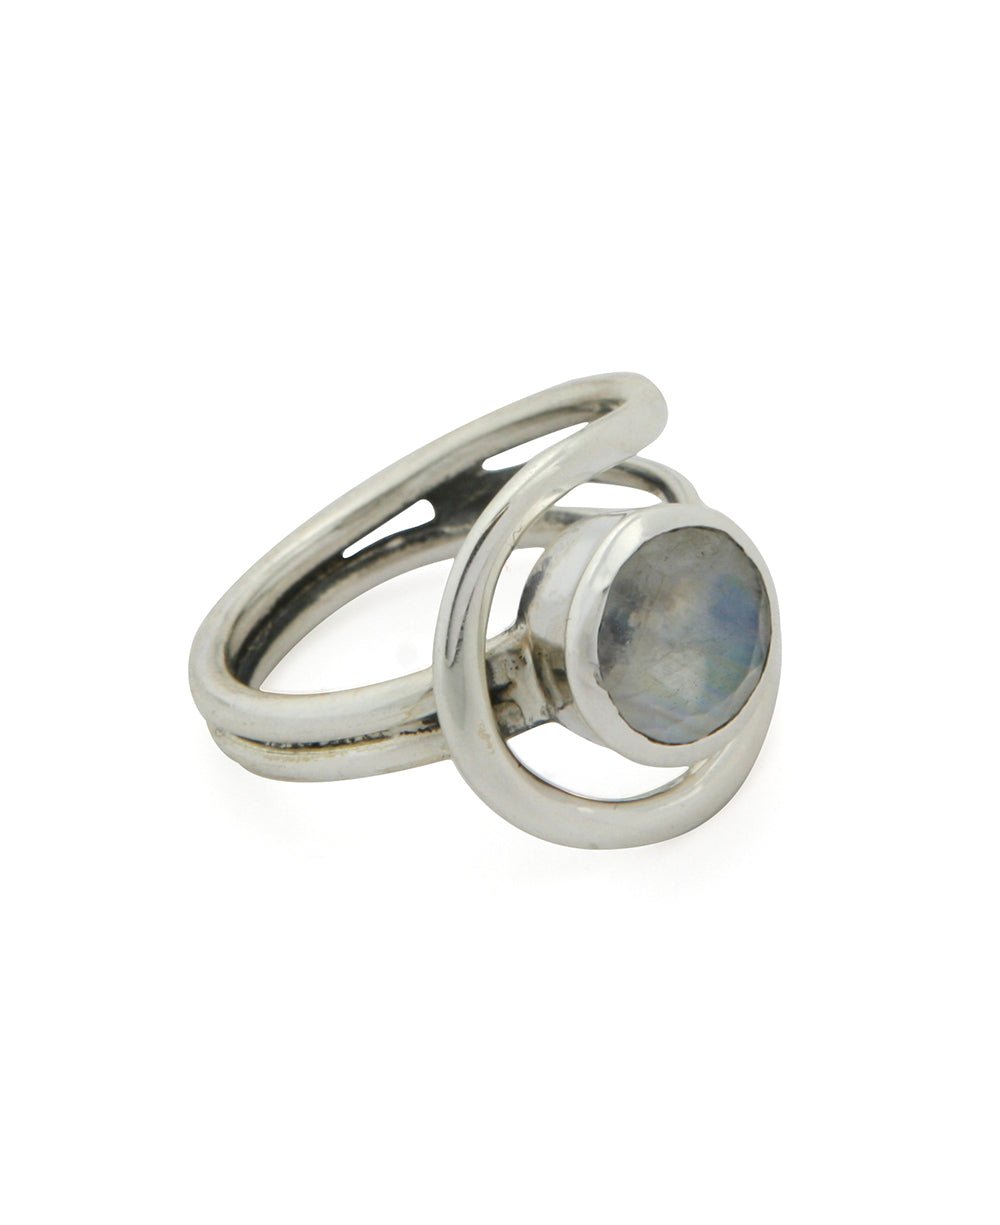 Magical Moonstone Sterling Silver Loop Ring - Rings Size 6